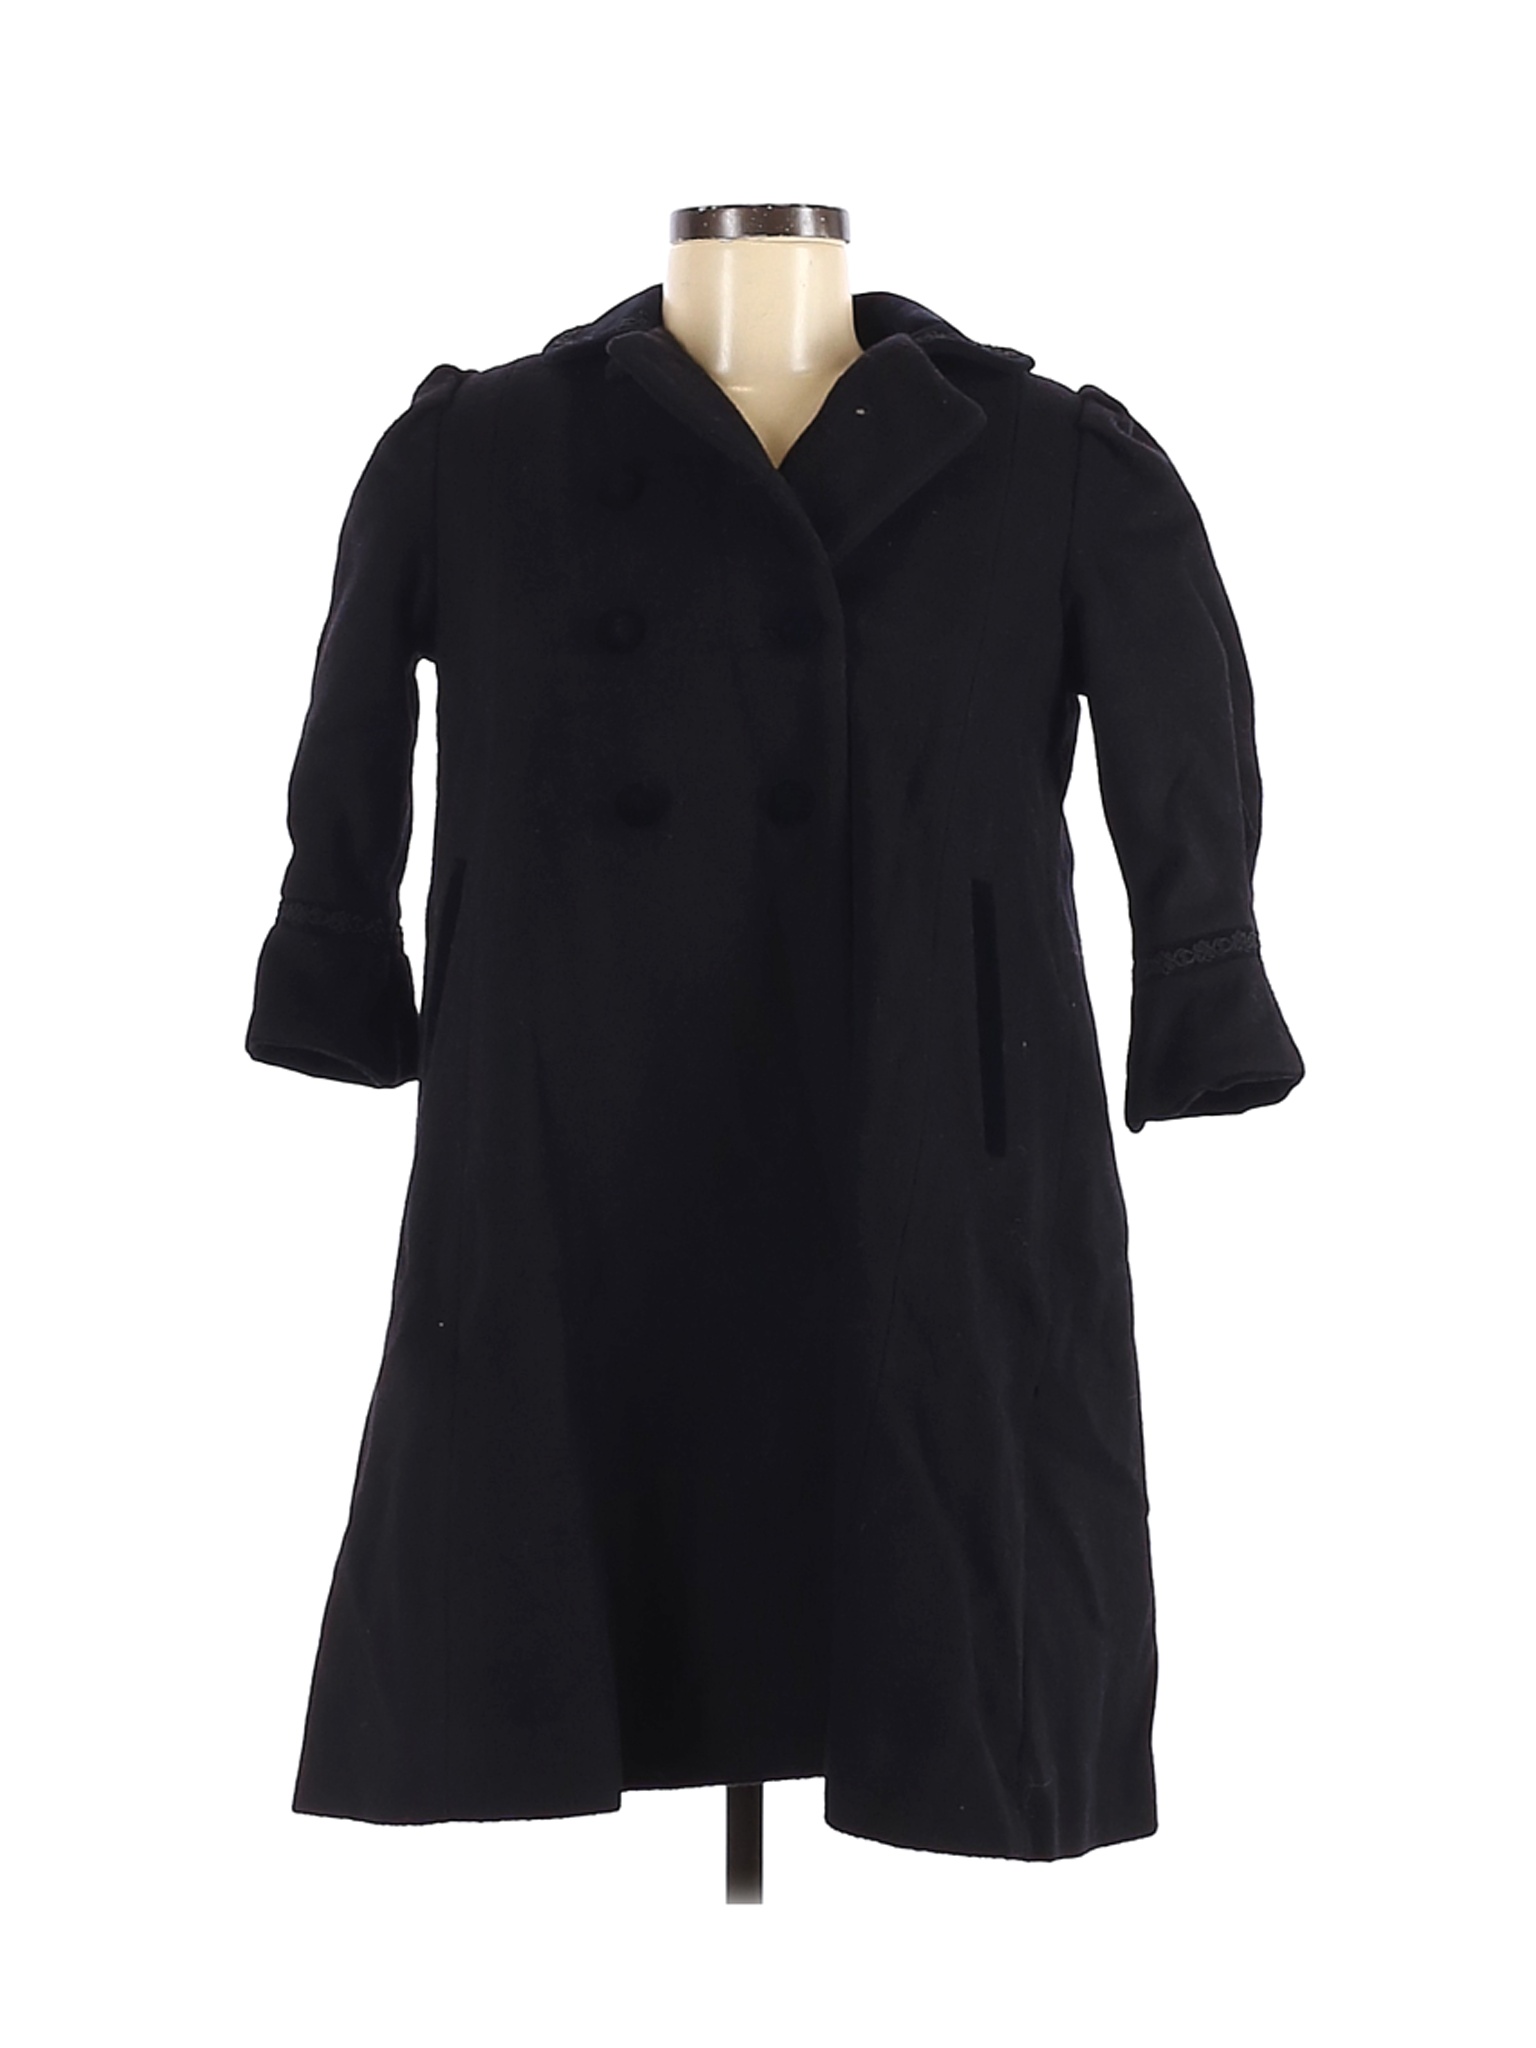 Rothschild Women Black Wool Coat 7 | eBay